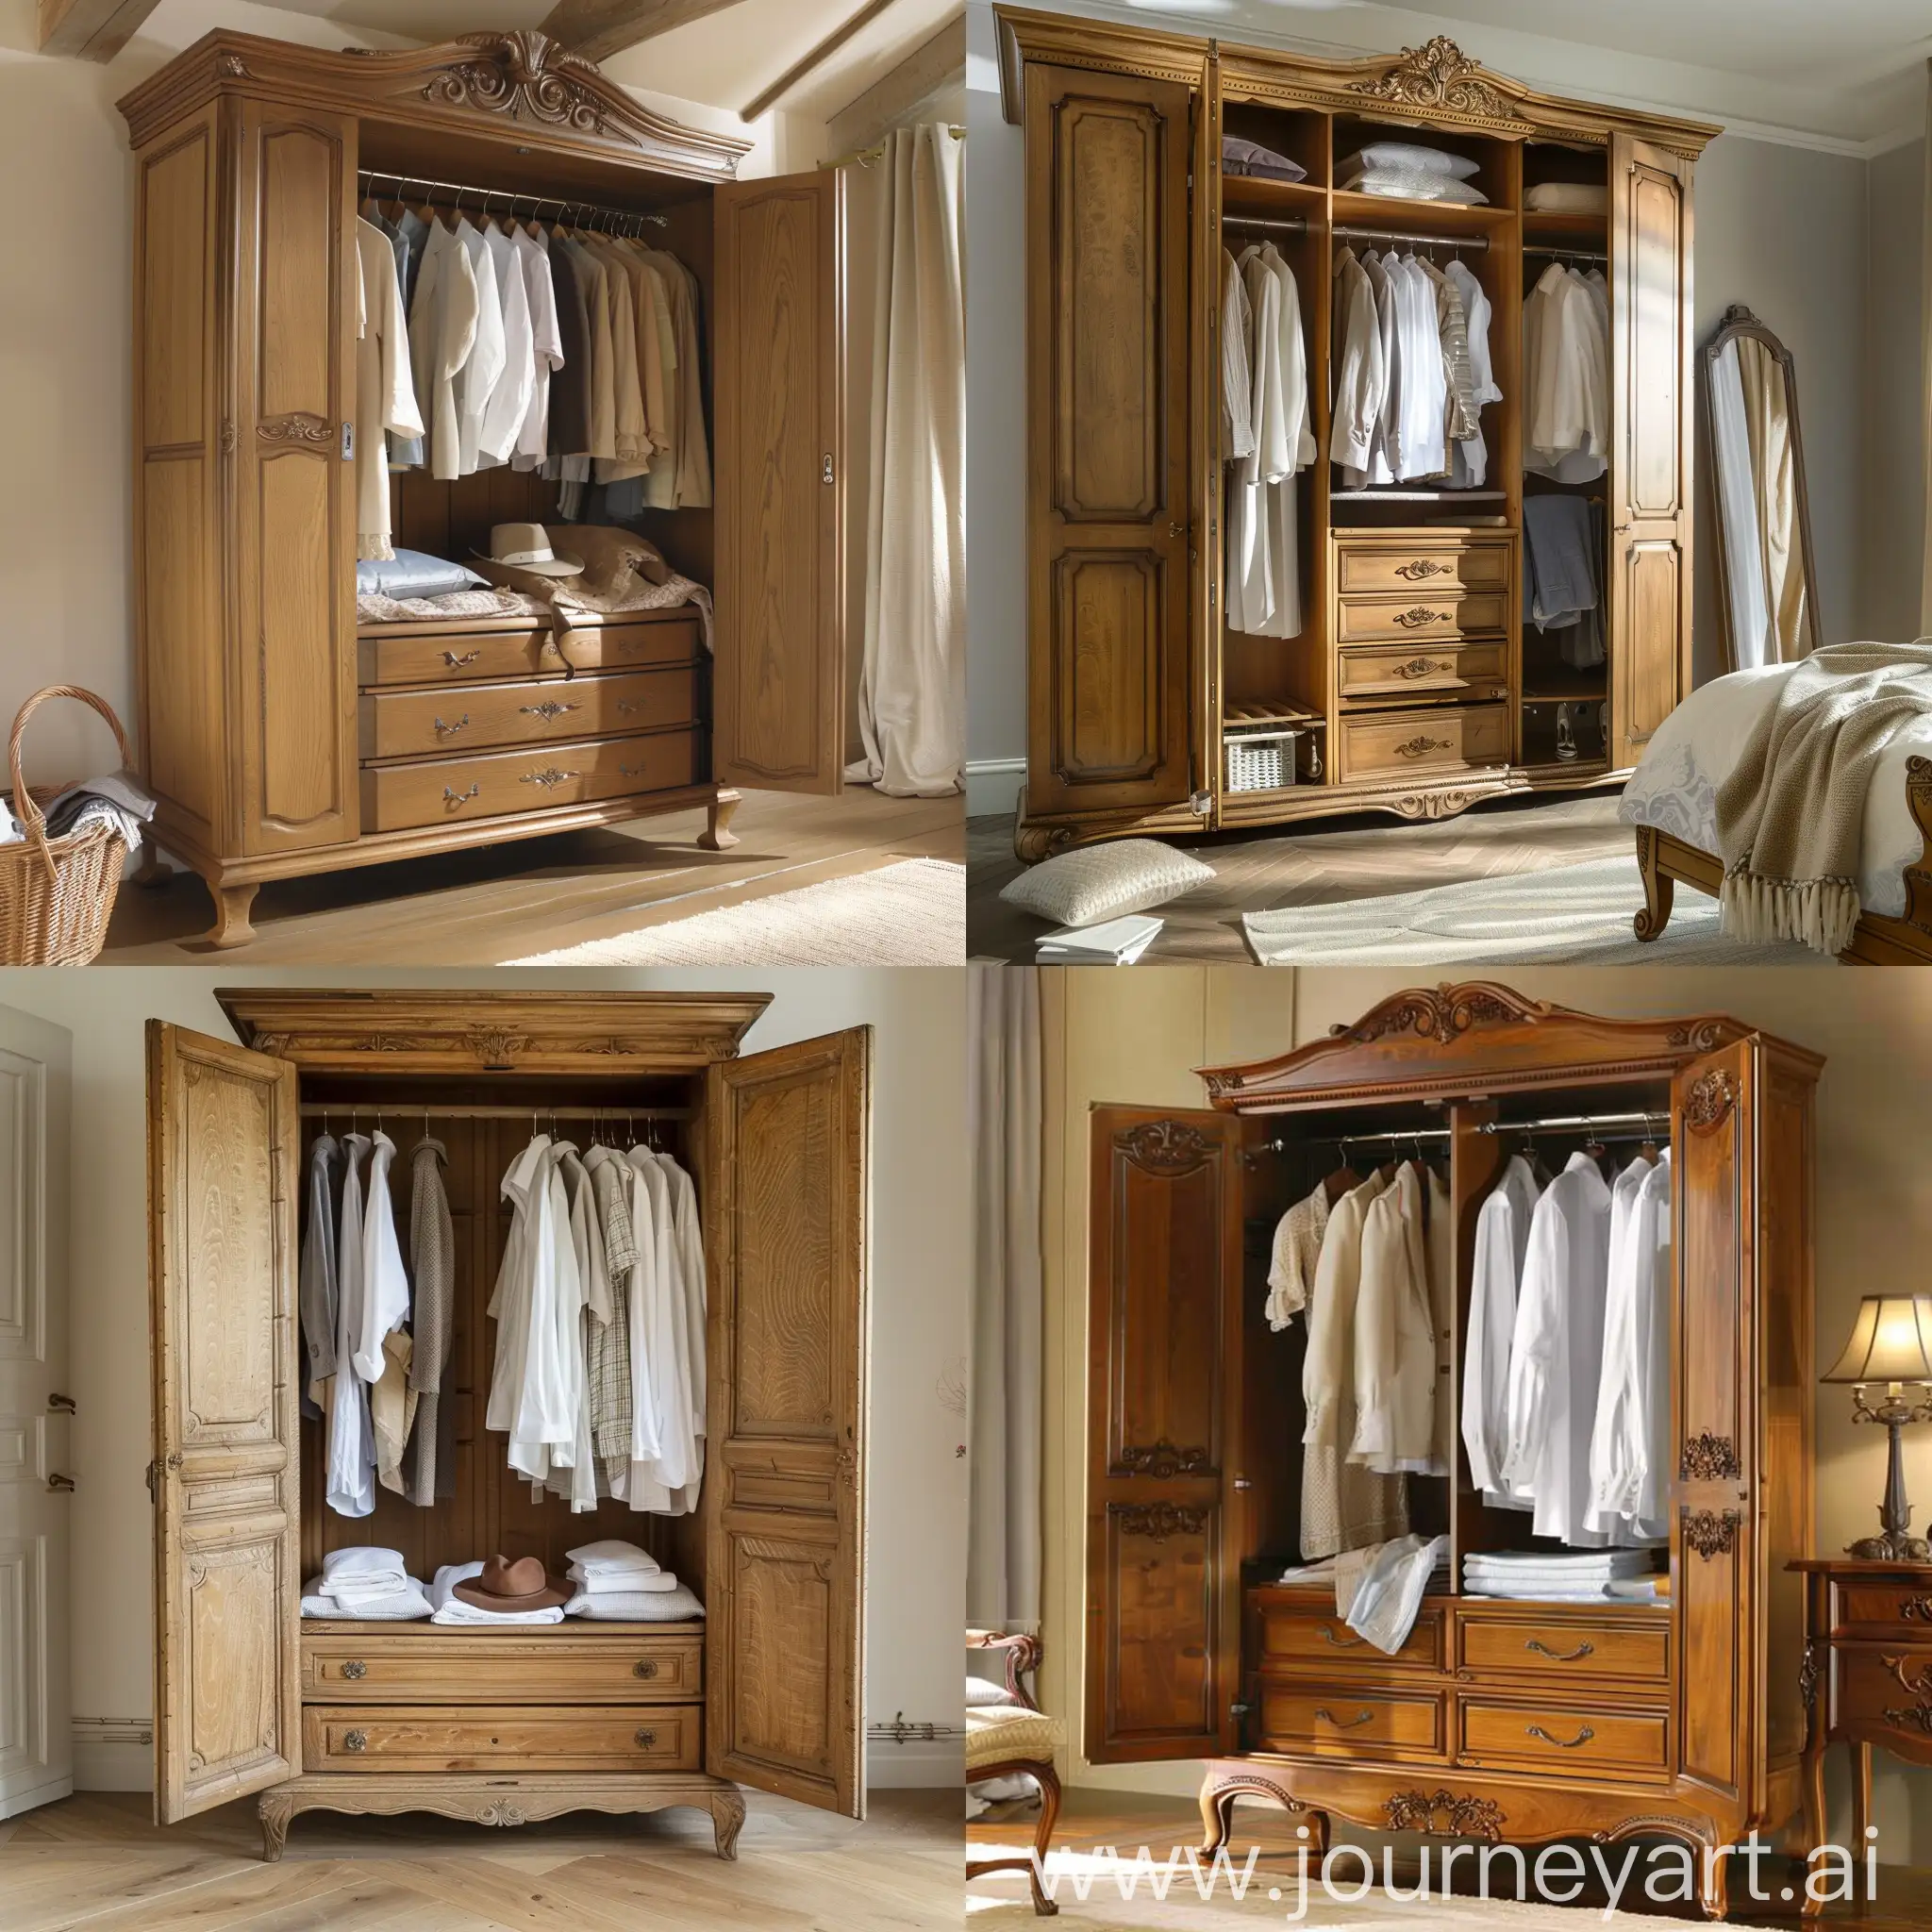 Elegant-French-Armoire-in-Master-Bedroom-Showcases-Timeless-Wardrobe